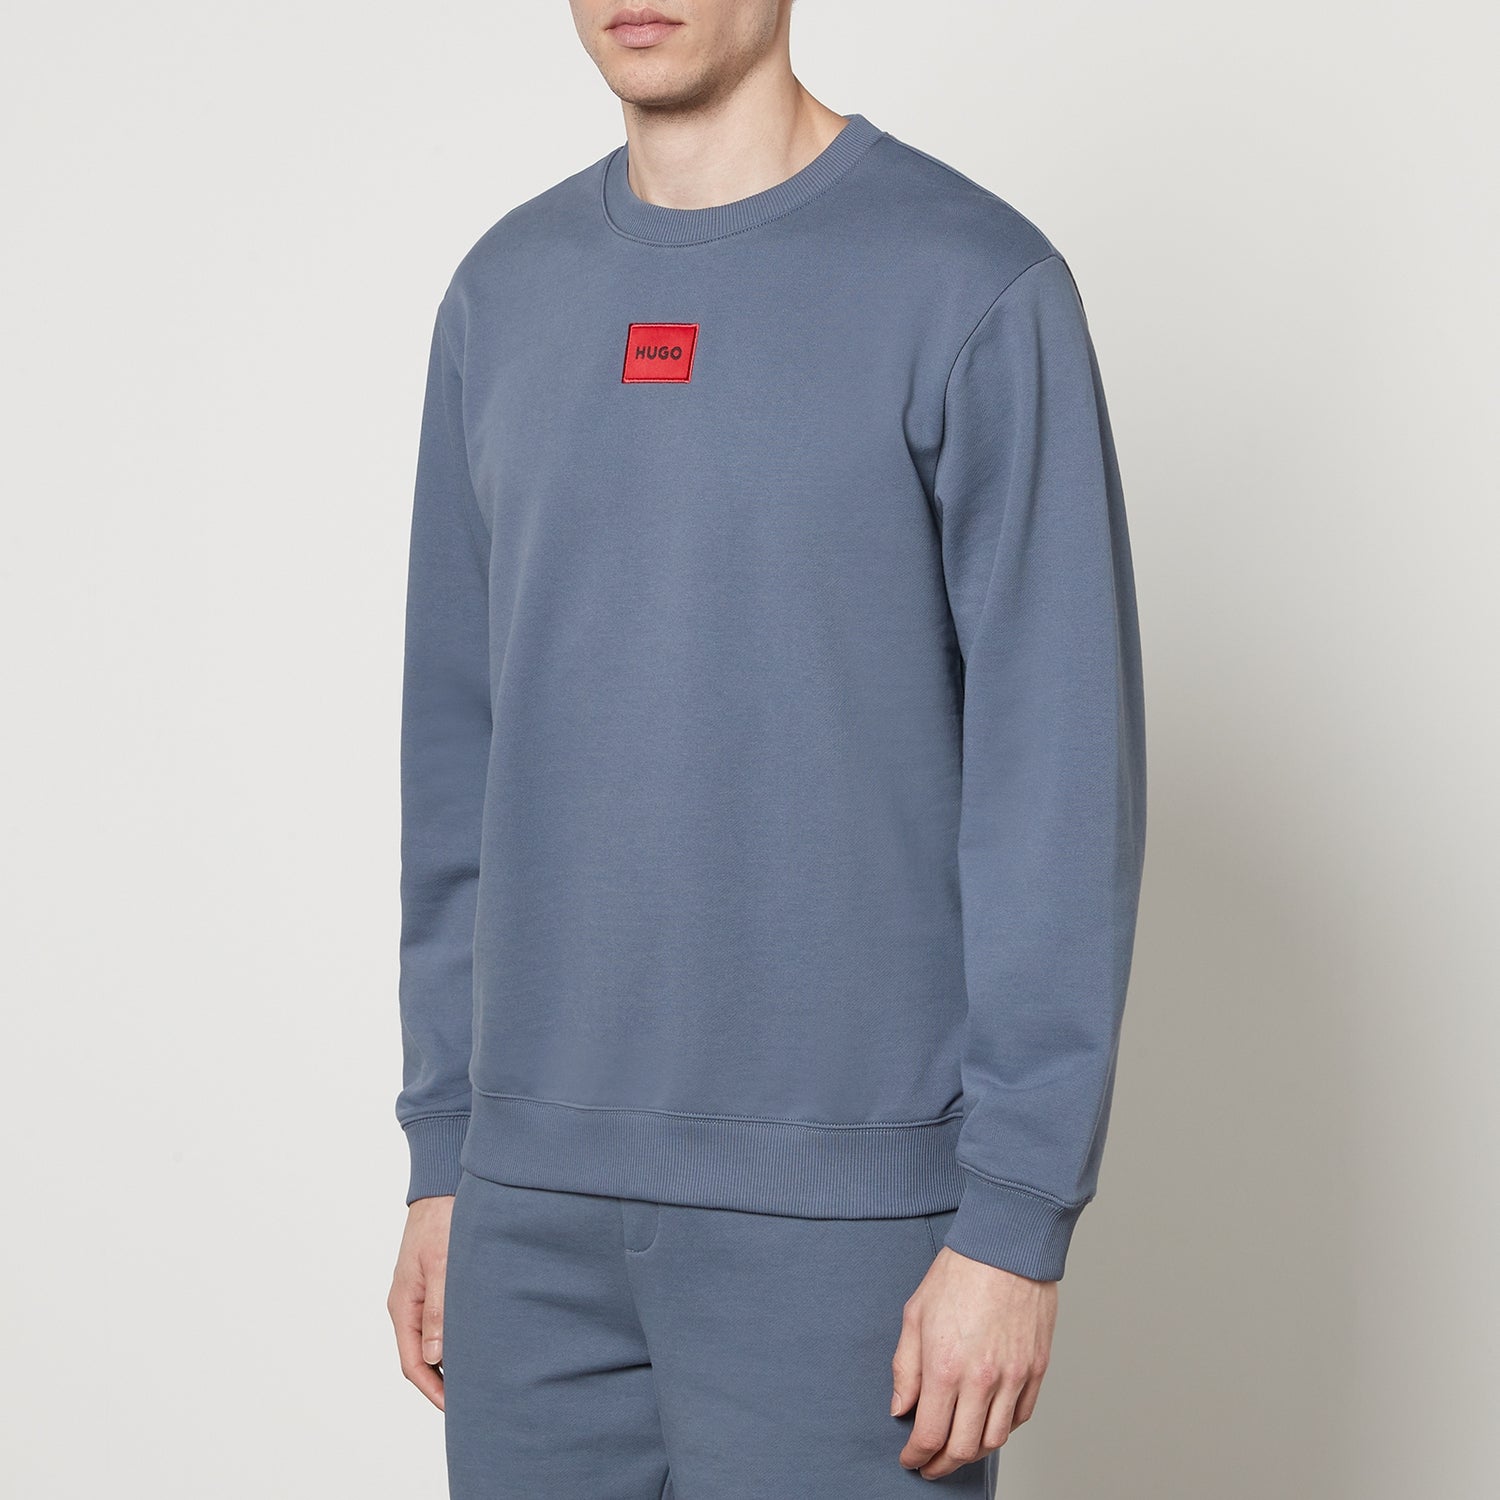 HUGO Diragol212 Cotton-Blend Jersey Sweatshirt - S